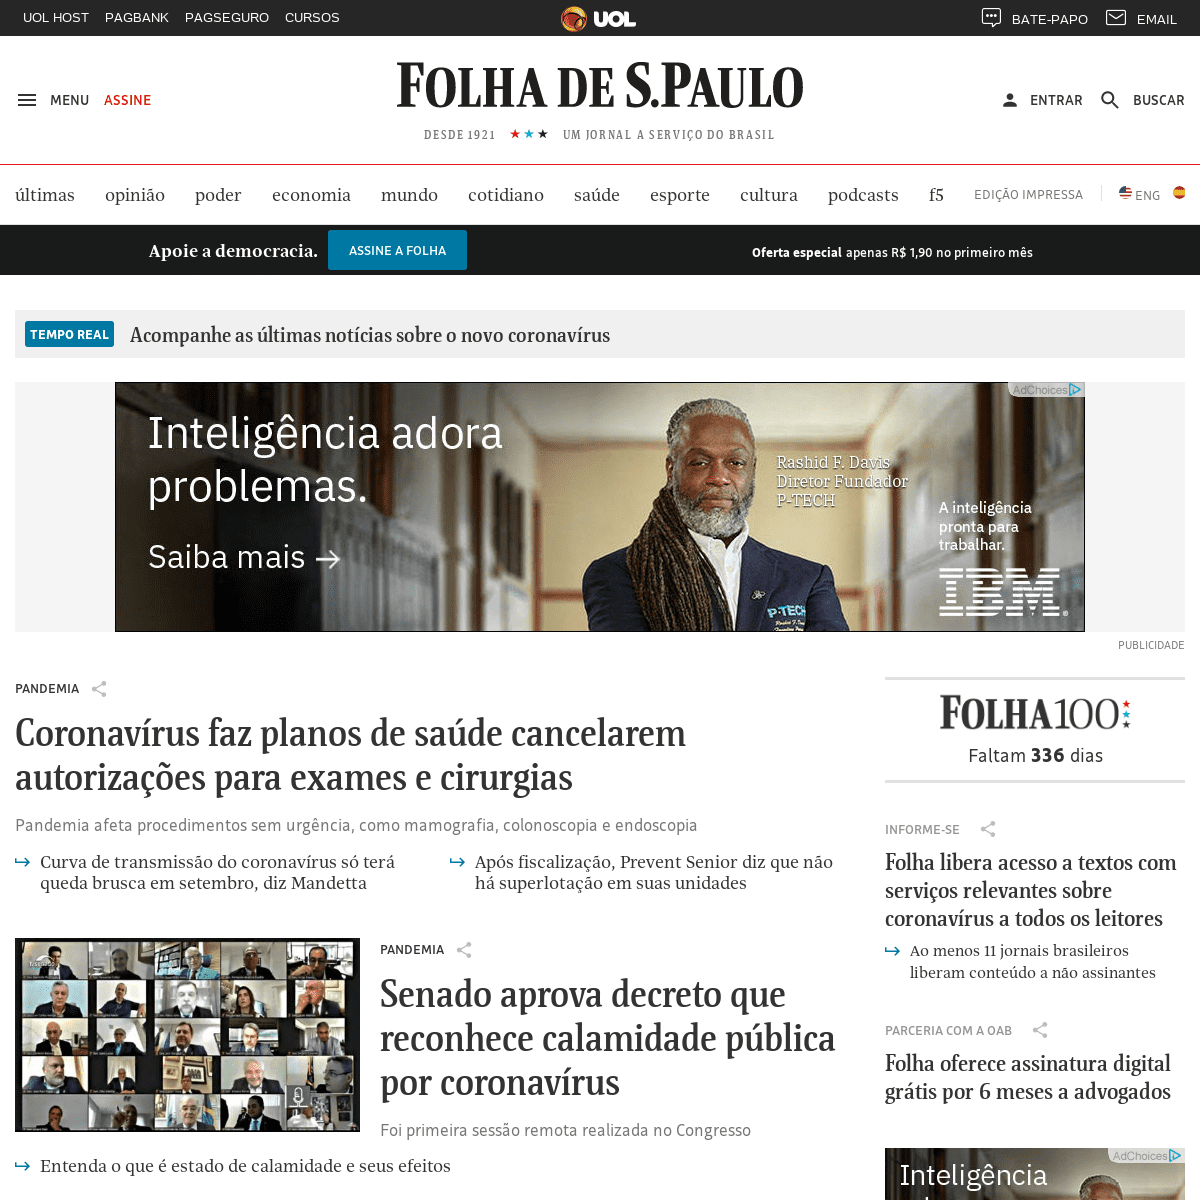 A complete backup of folha.uol.com.br